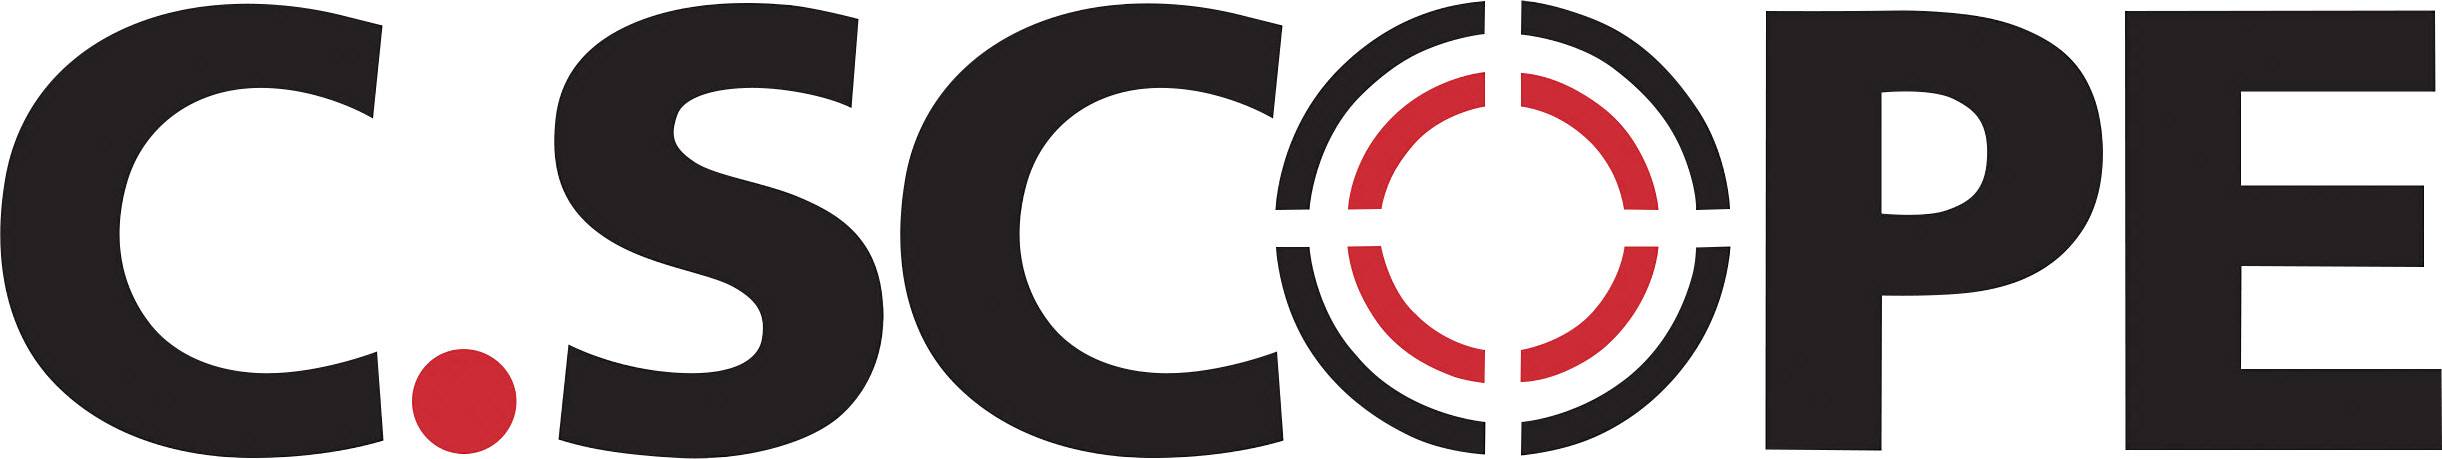 c.scope logo detector metal brand